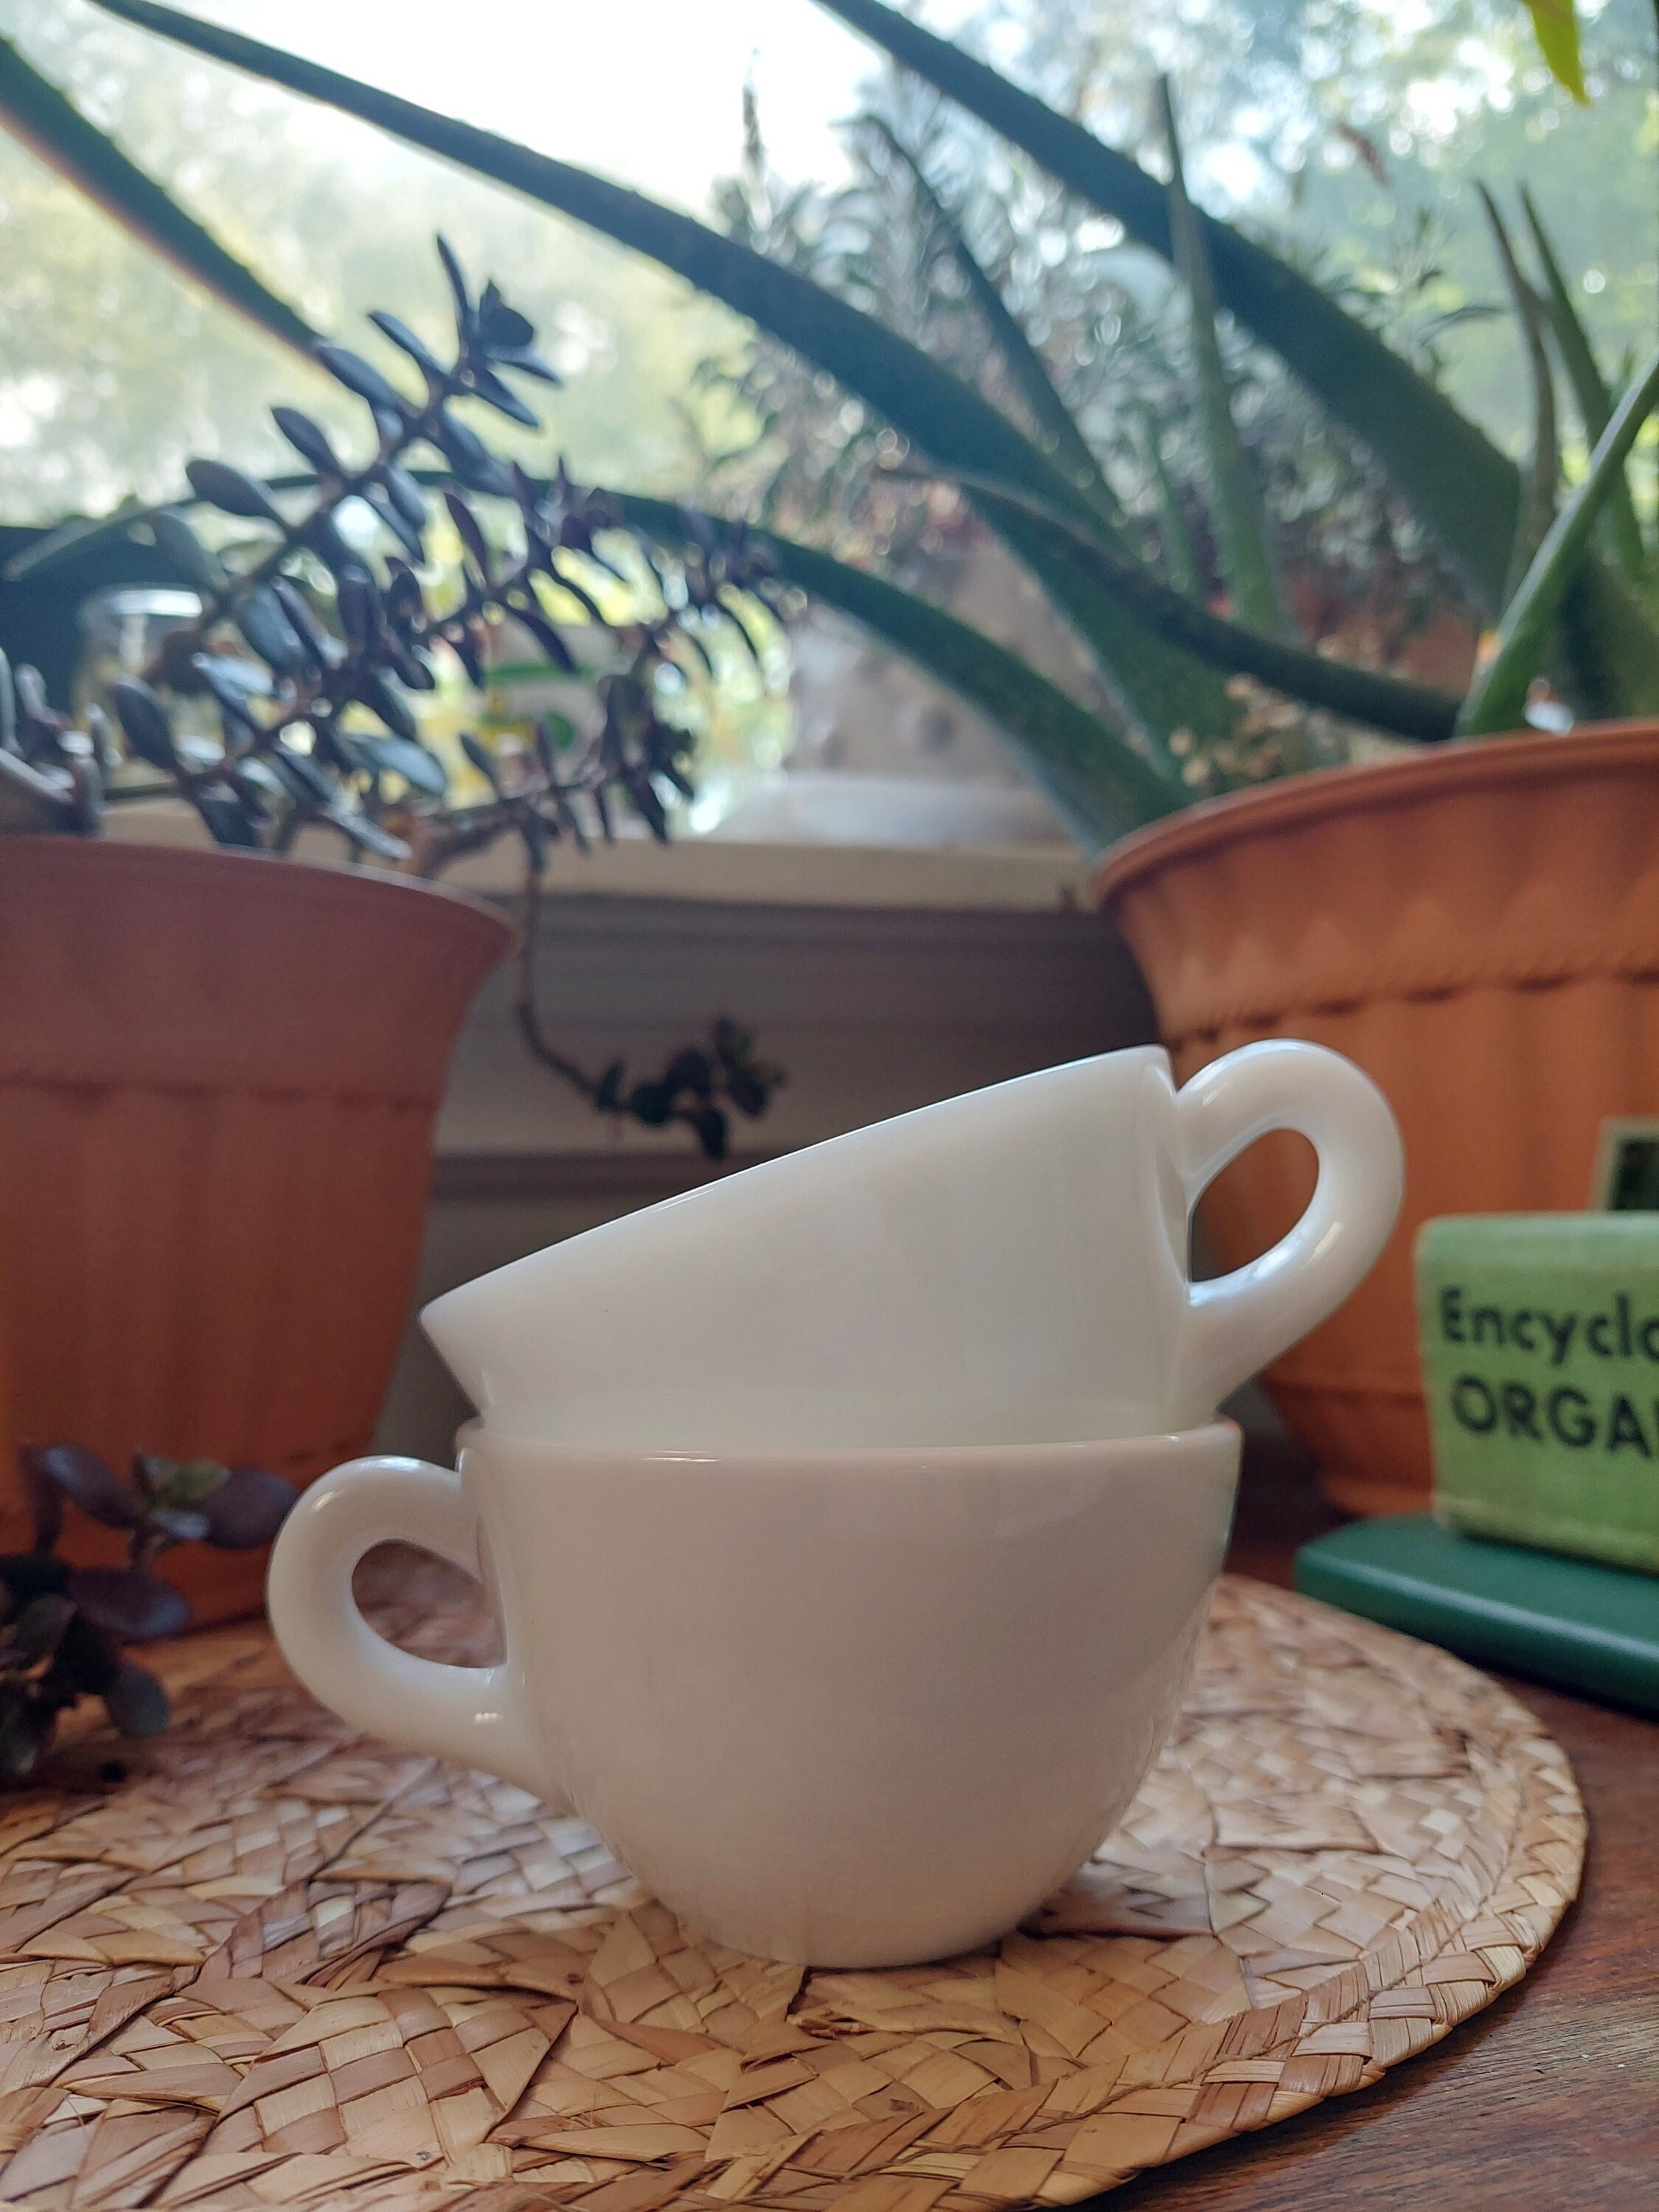 Heart & Soul Perfect Match 2.7 oz. Thyme Porcelain Espresso Cup